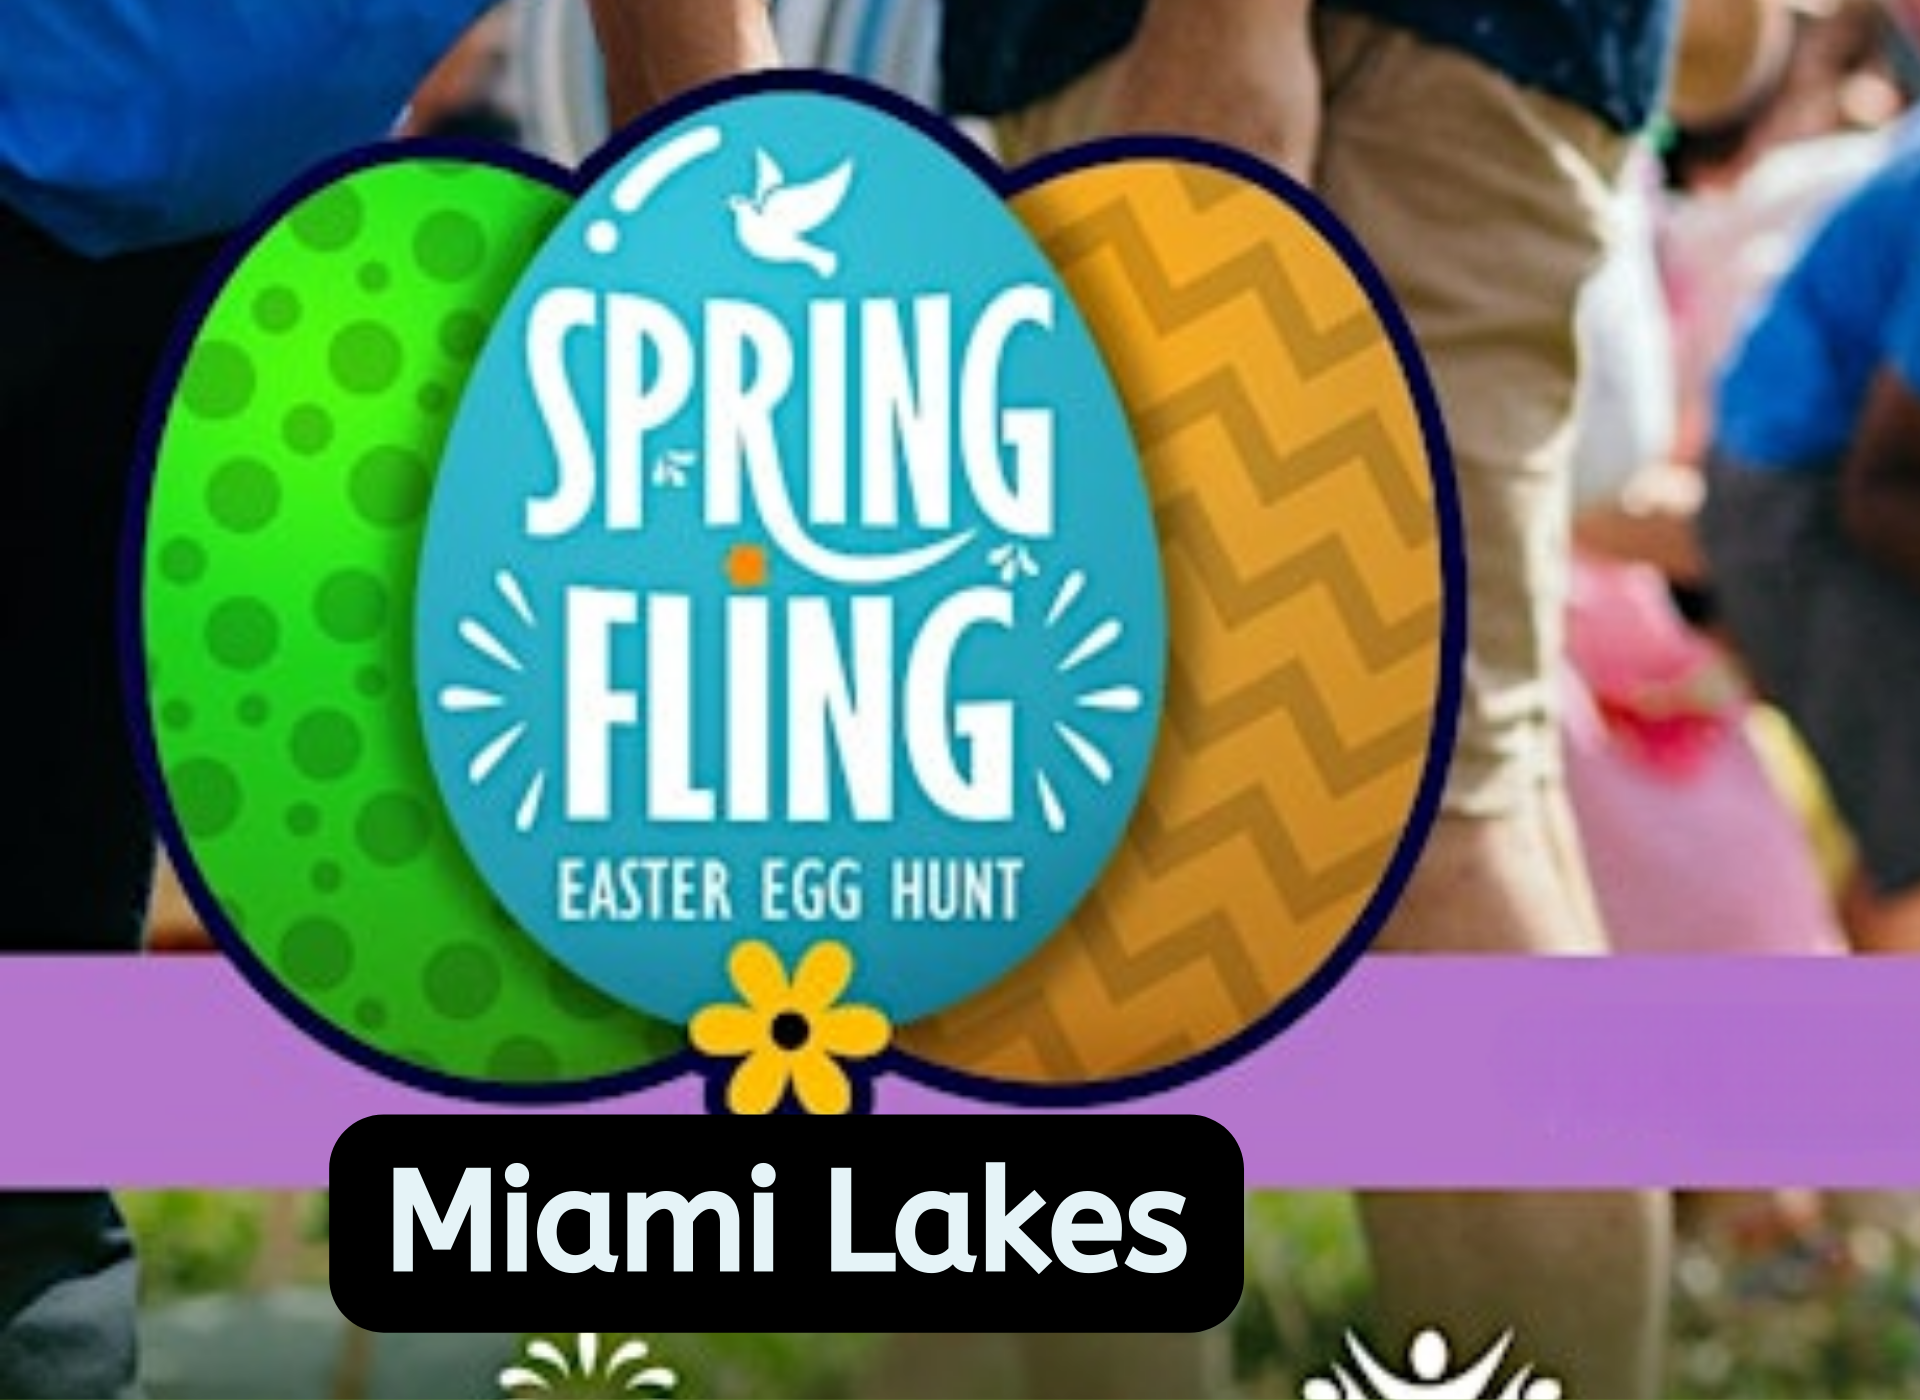 Town of Miami Lakes - Spring Fling